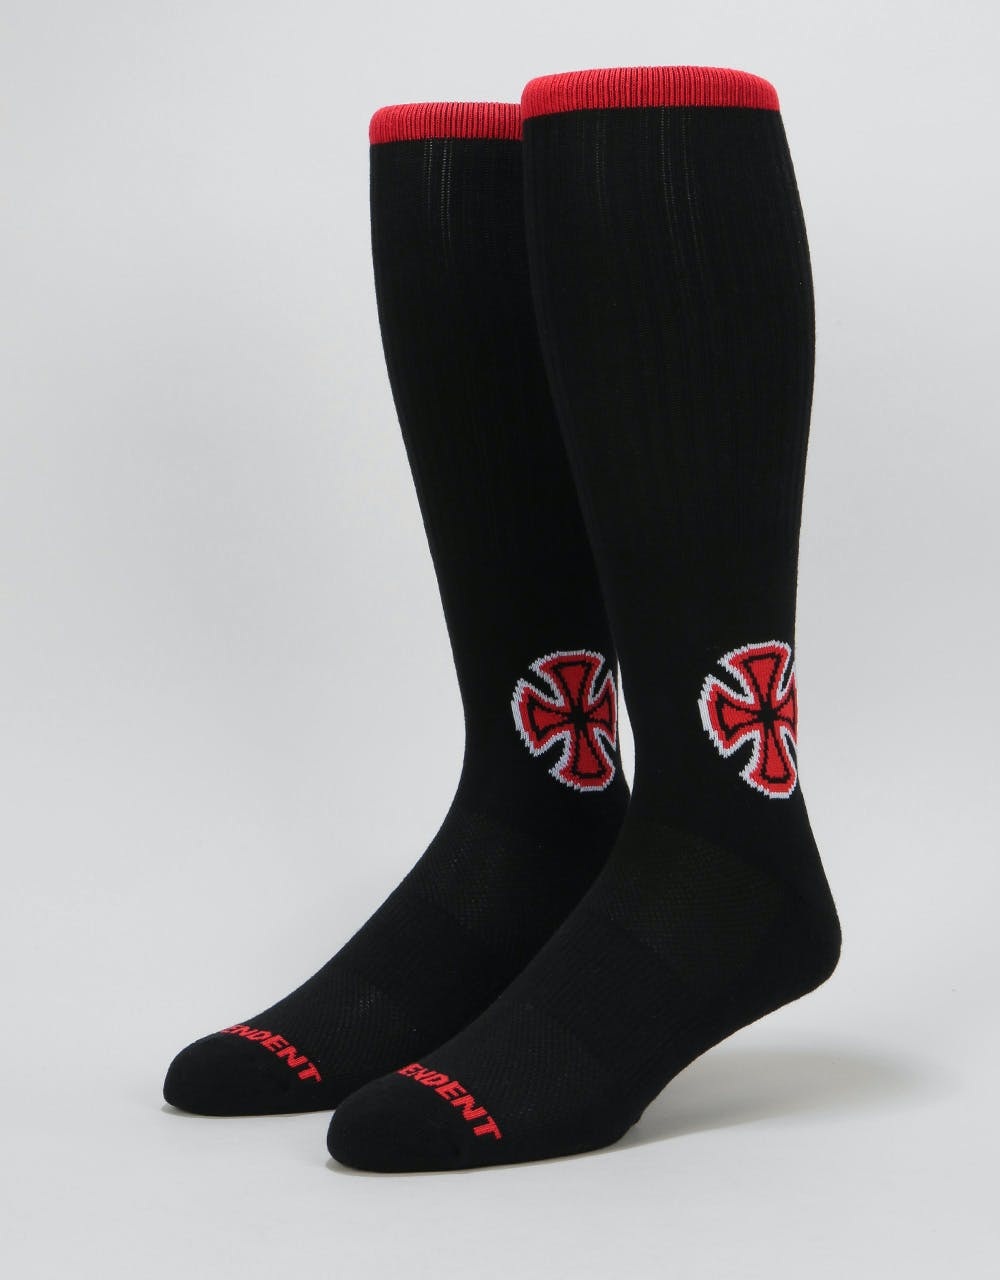 Independent Big Cross Primary Socks - Black